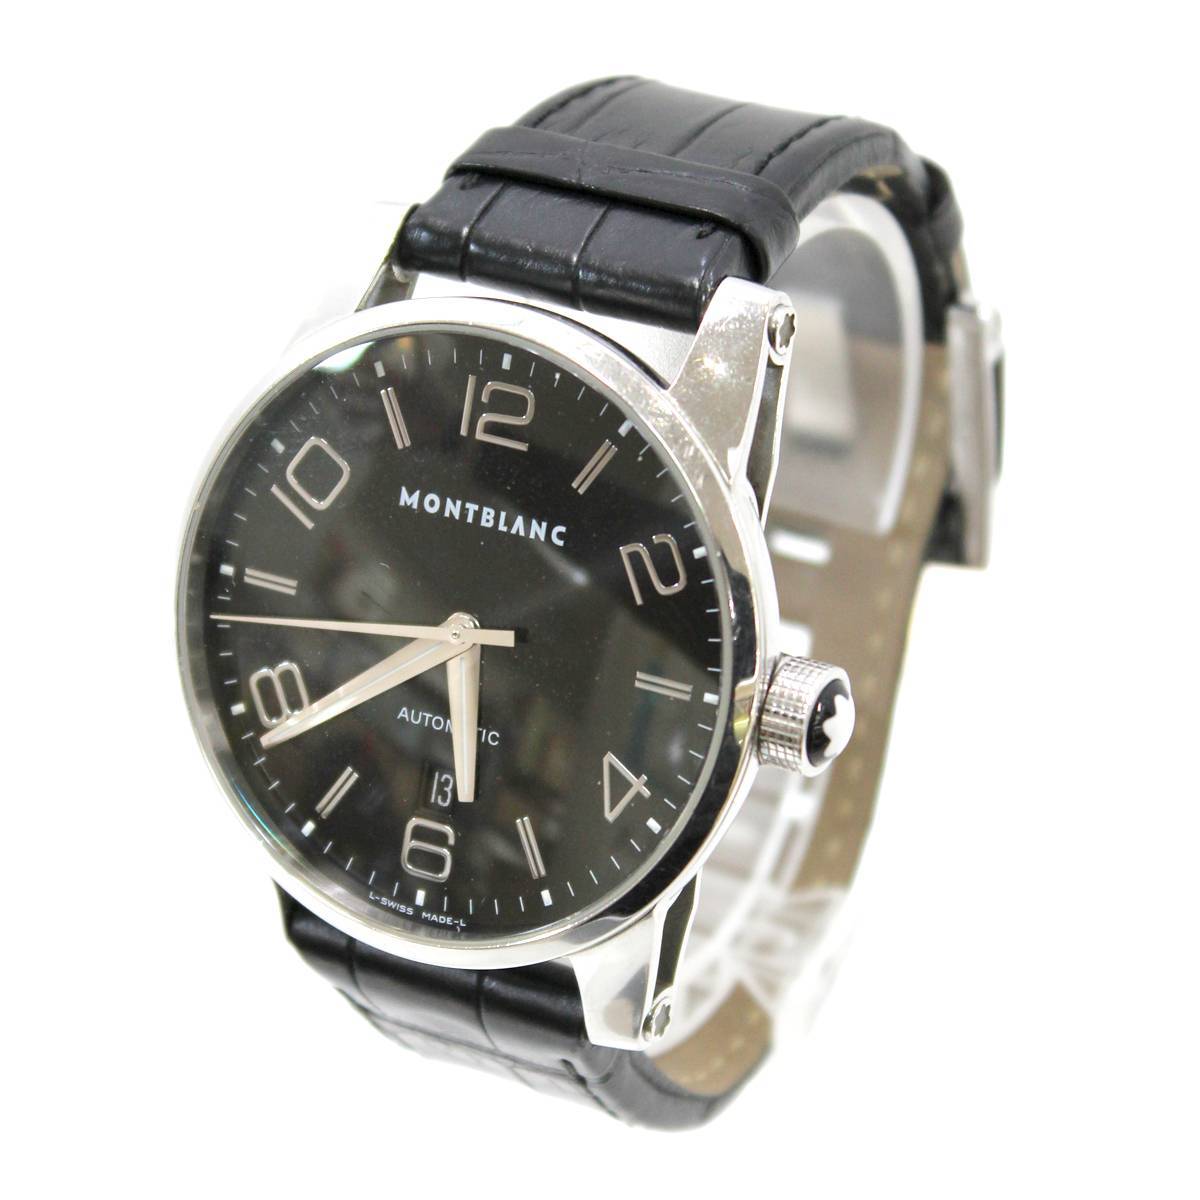 MONTBLANC/モンブラン タイムウォーカー 腕時計 SS ブラック 取り扱い説明書 7070 PB211610 FS Bランク